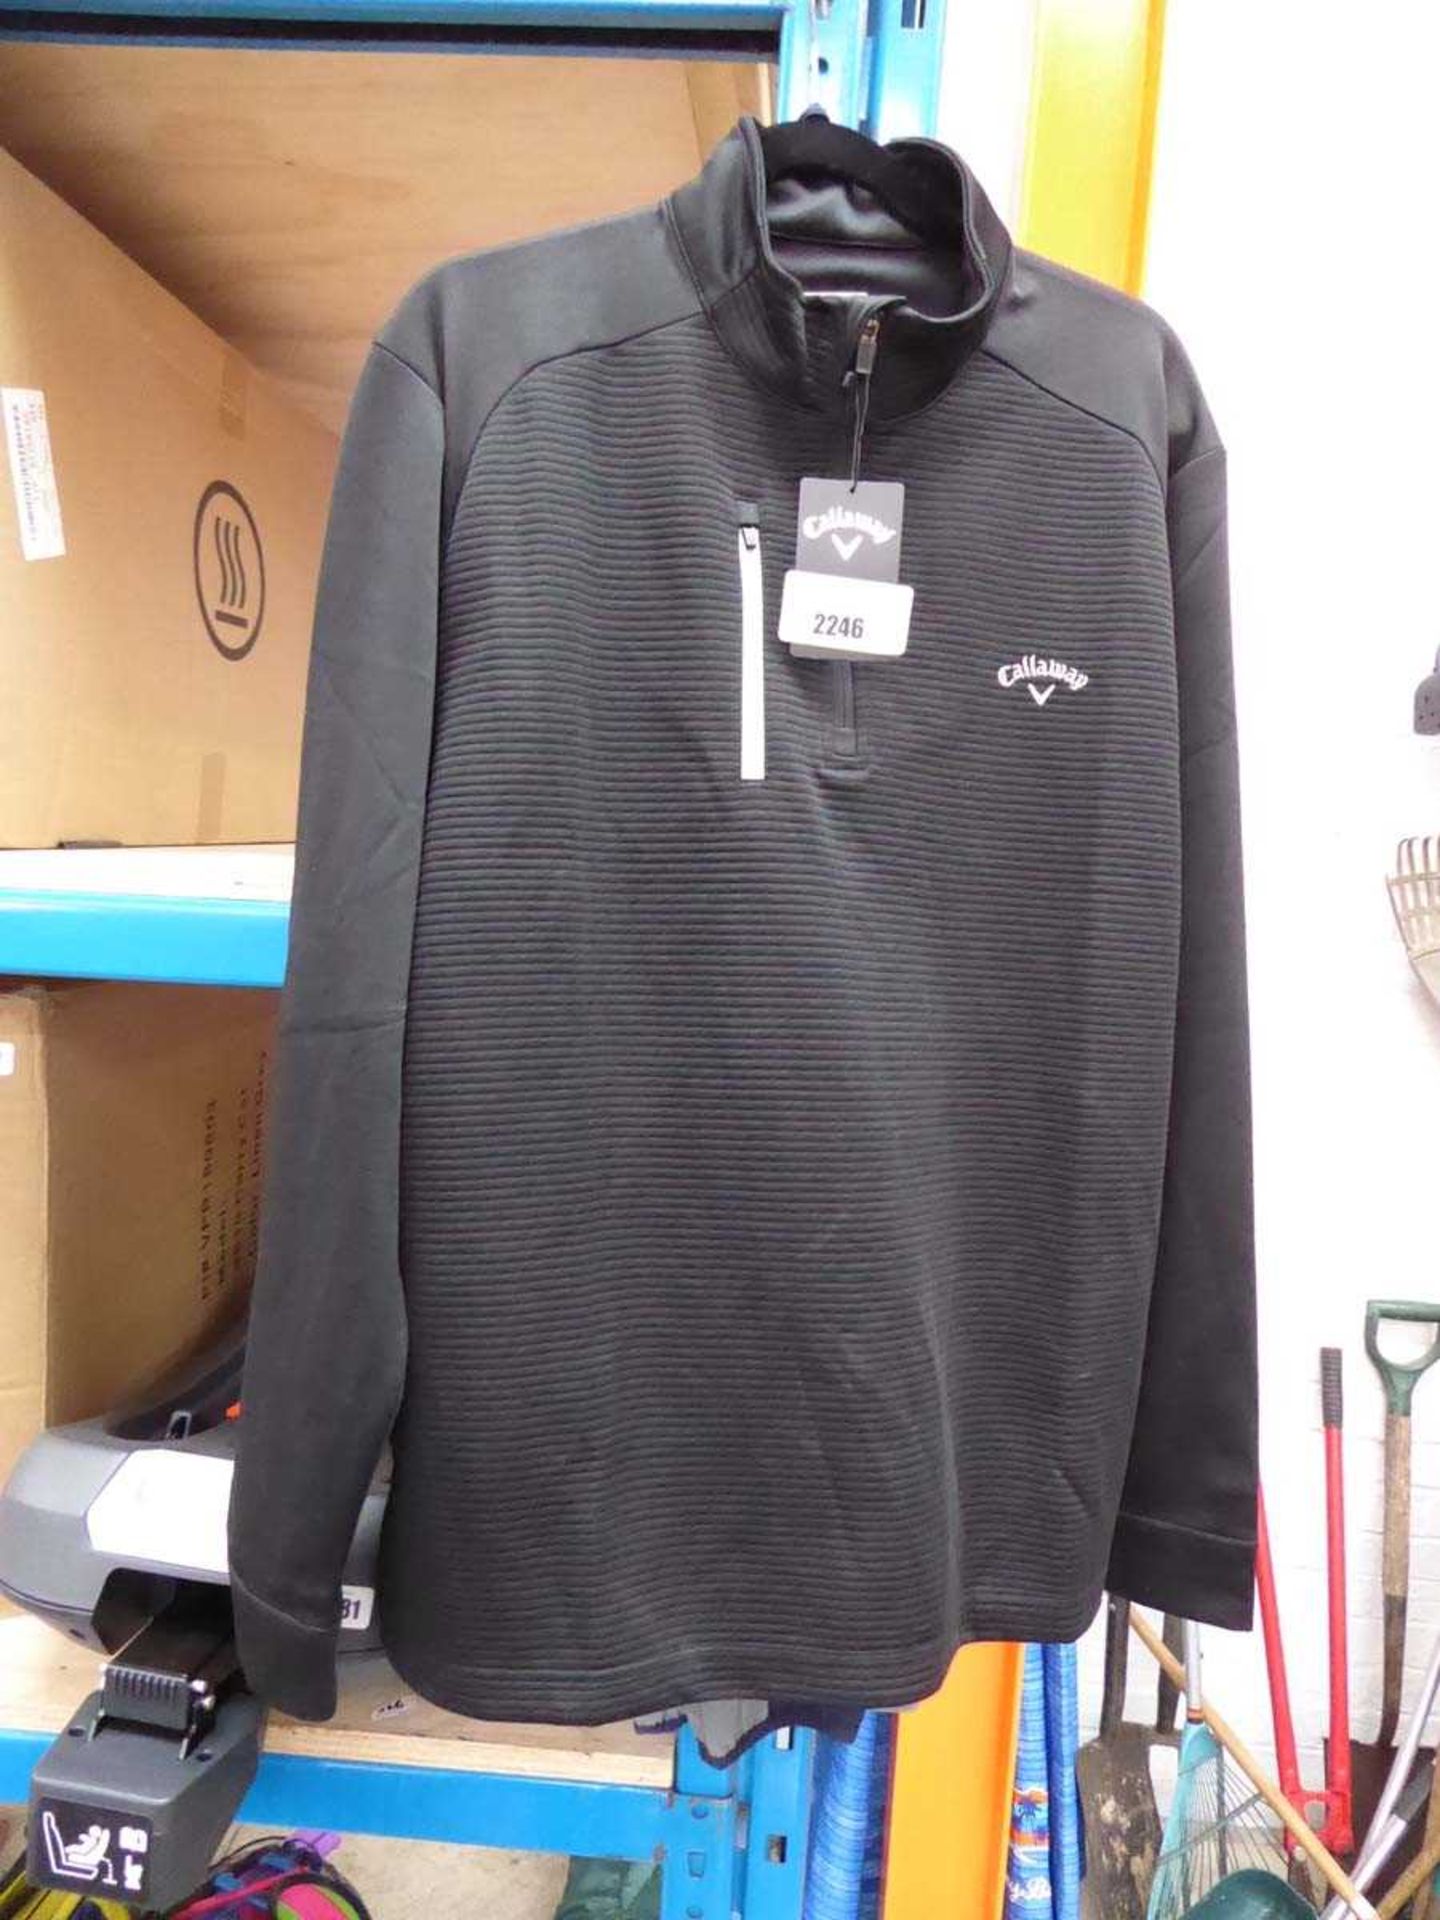 +VAT Callaway 1/4 zip long sleeve top in black (size L) with Callaway blue and grey full zip